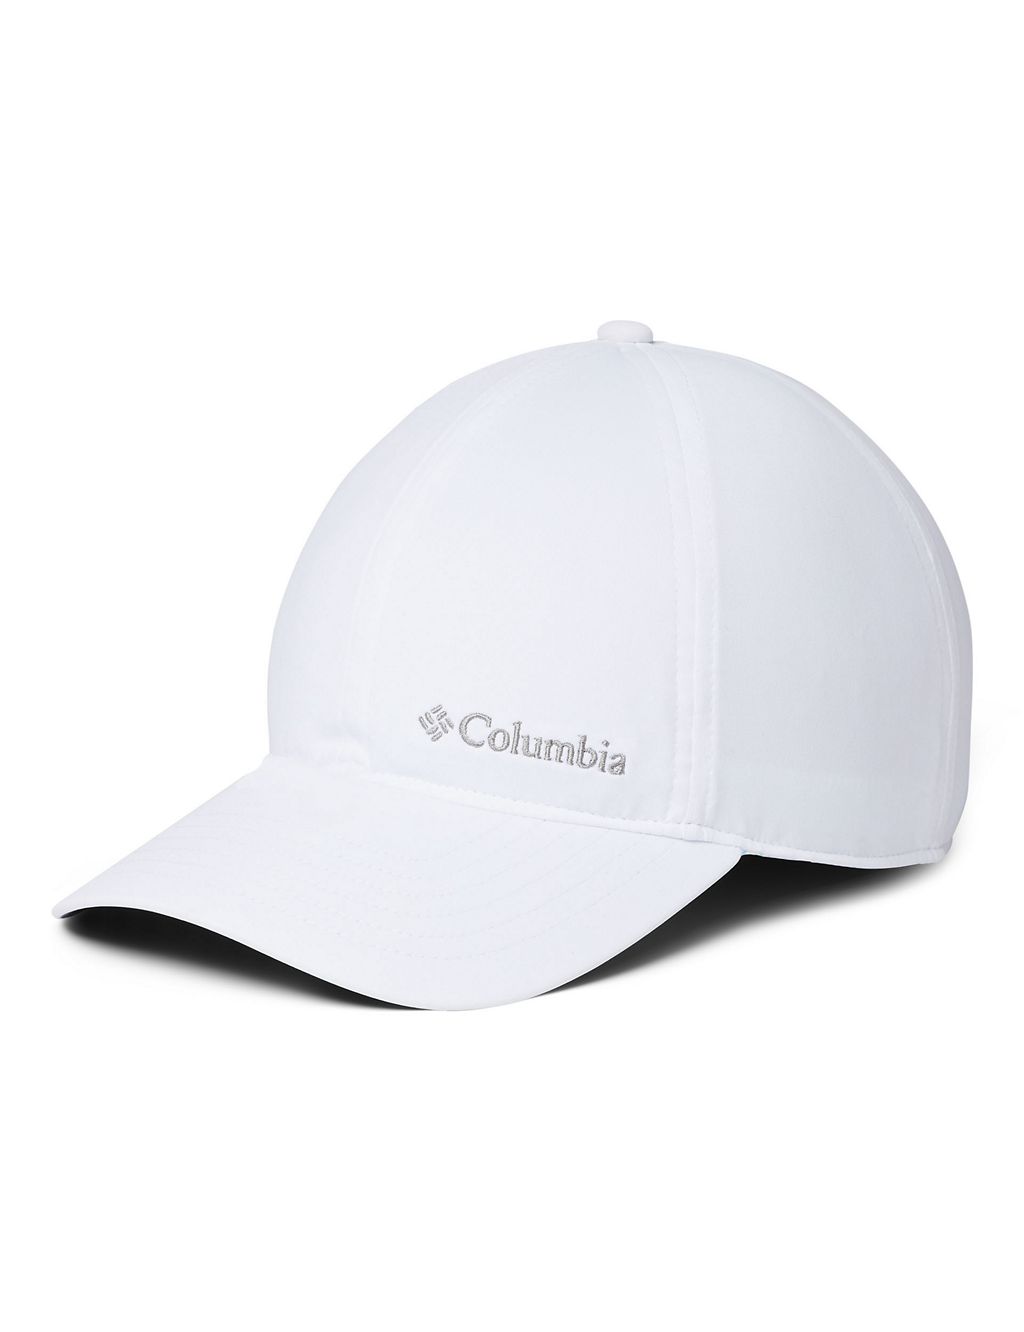 Coolhead™ II Baseball Cap 3 of 4